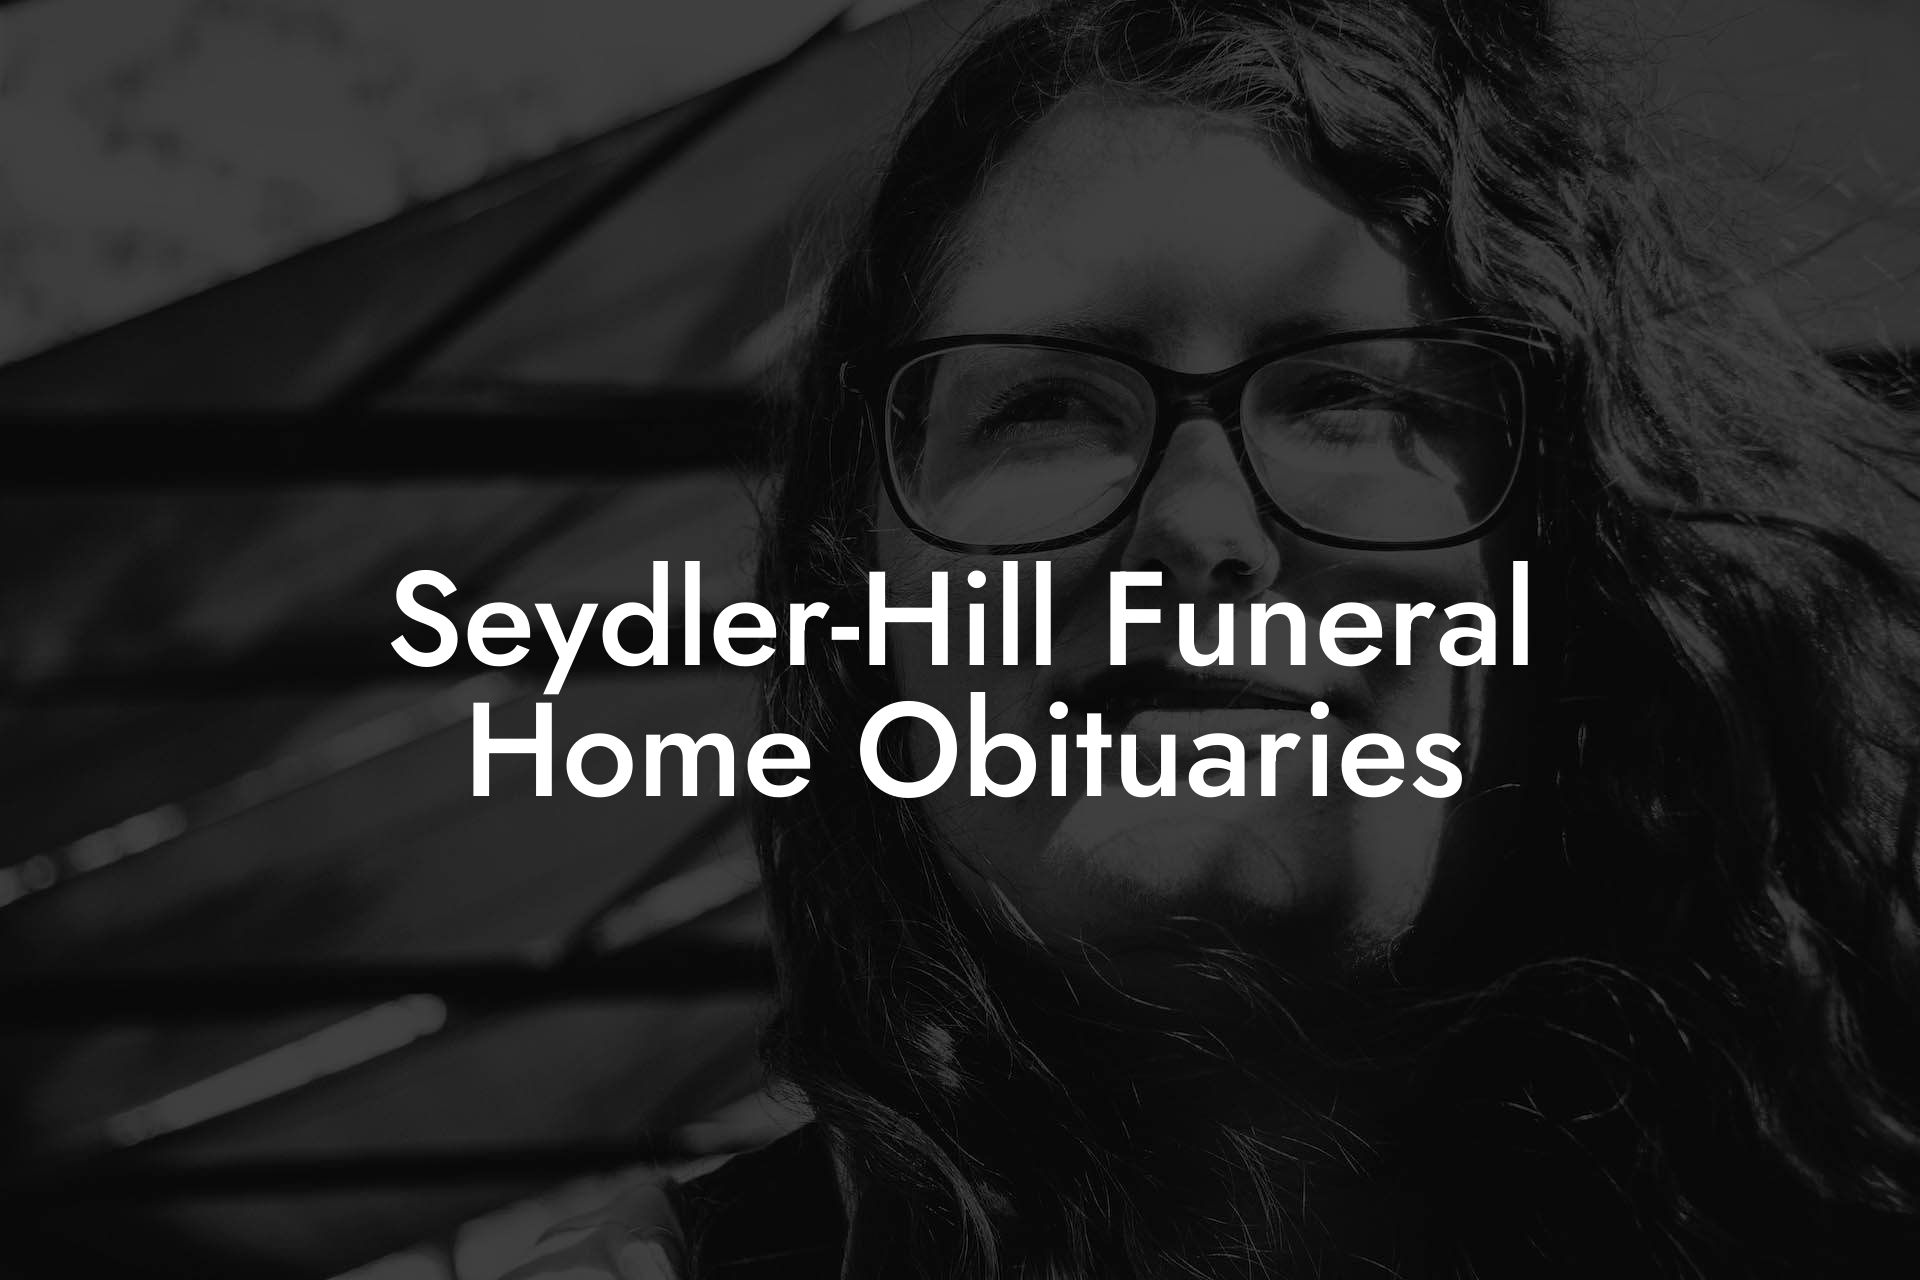 Seydler-Hill Funeral Home Obituaries